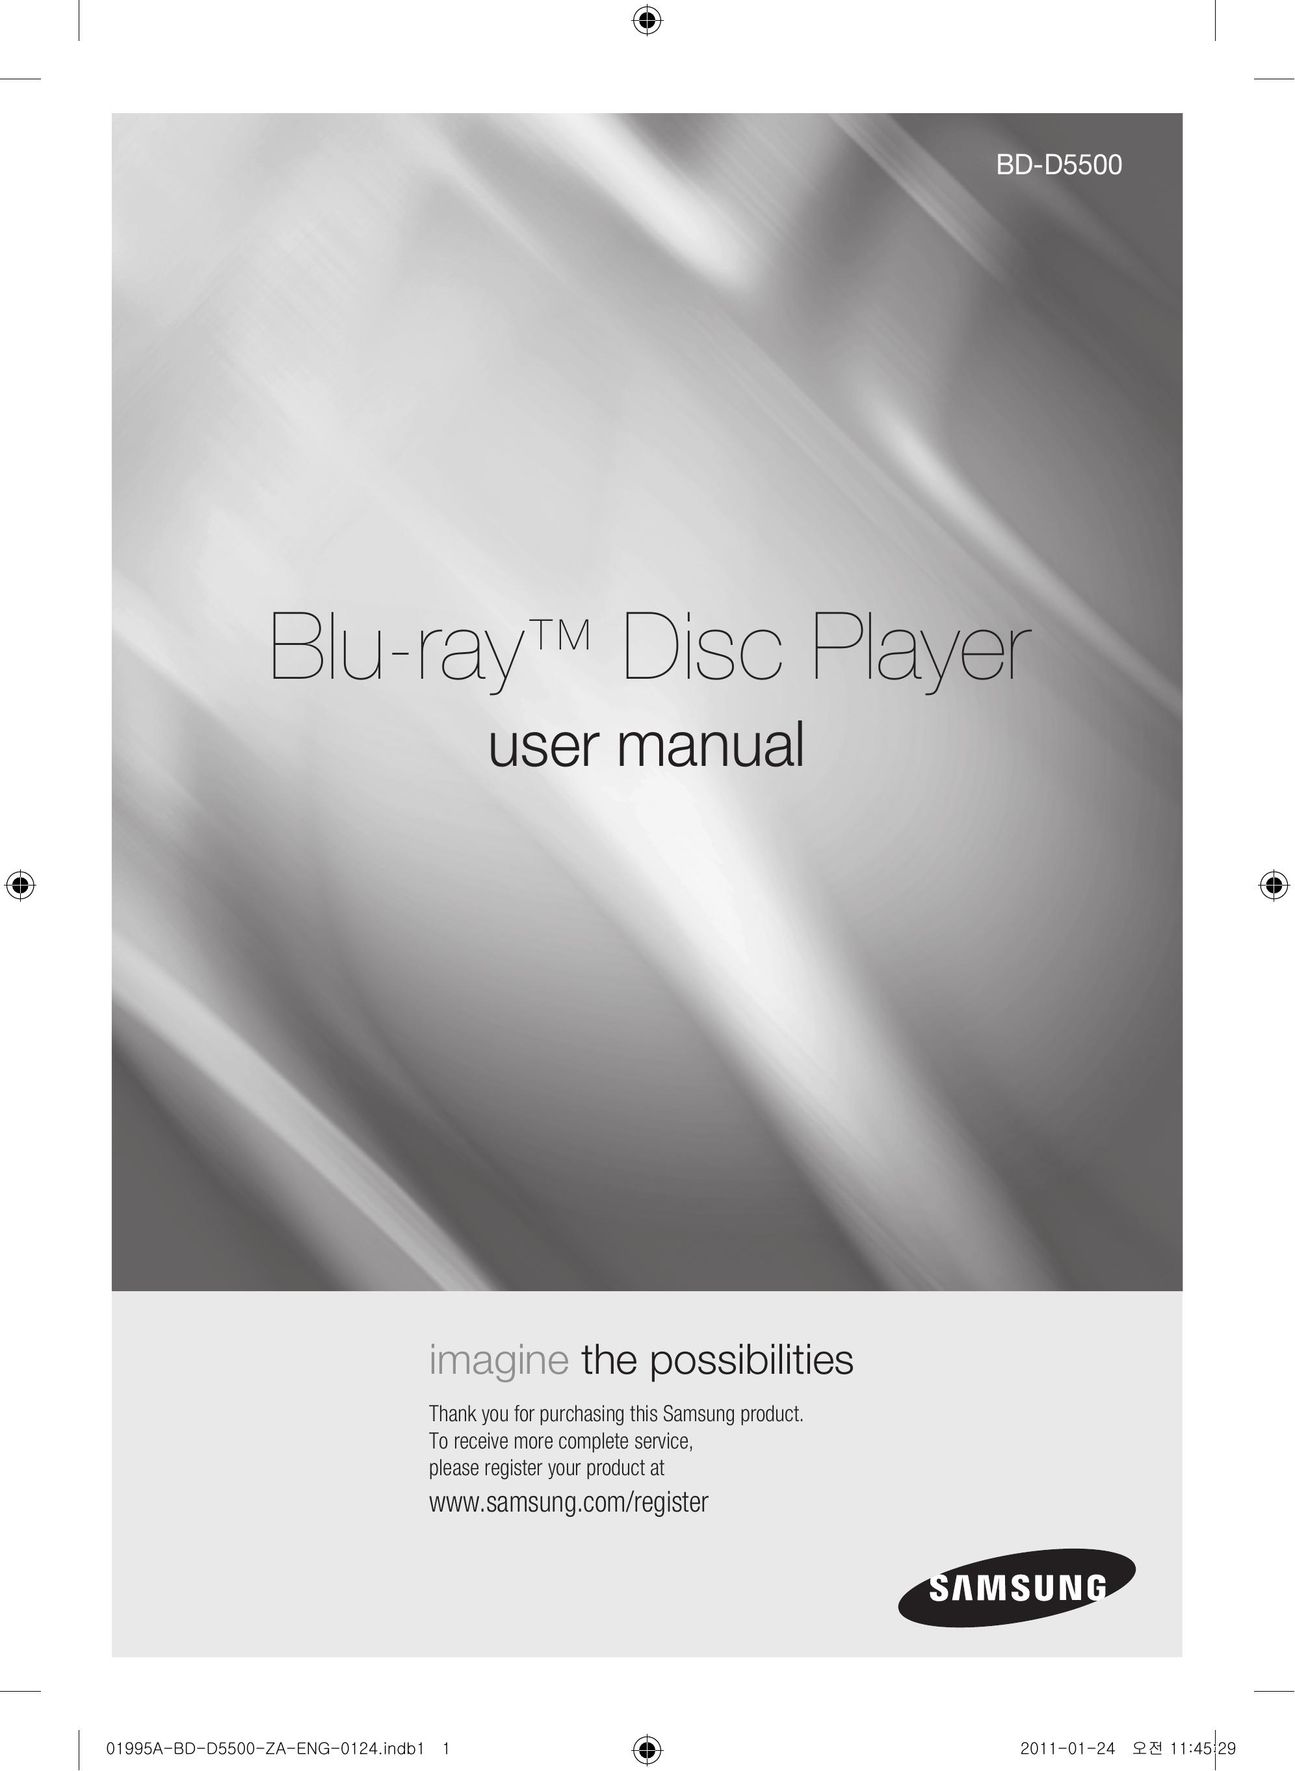 Samsung BD-D5500 Blu-ray Player User Manual